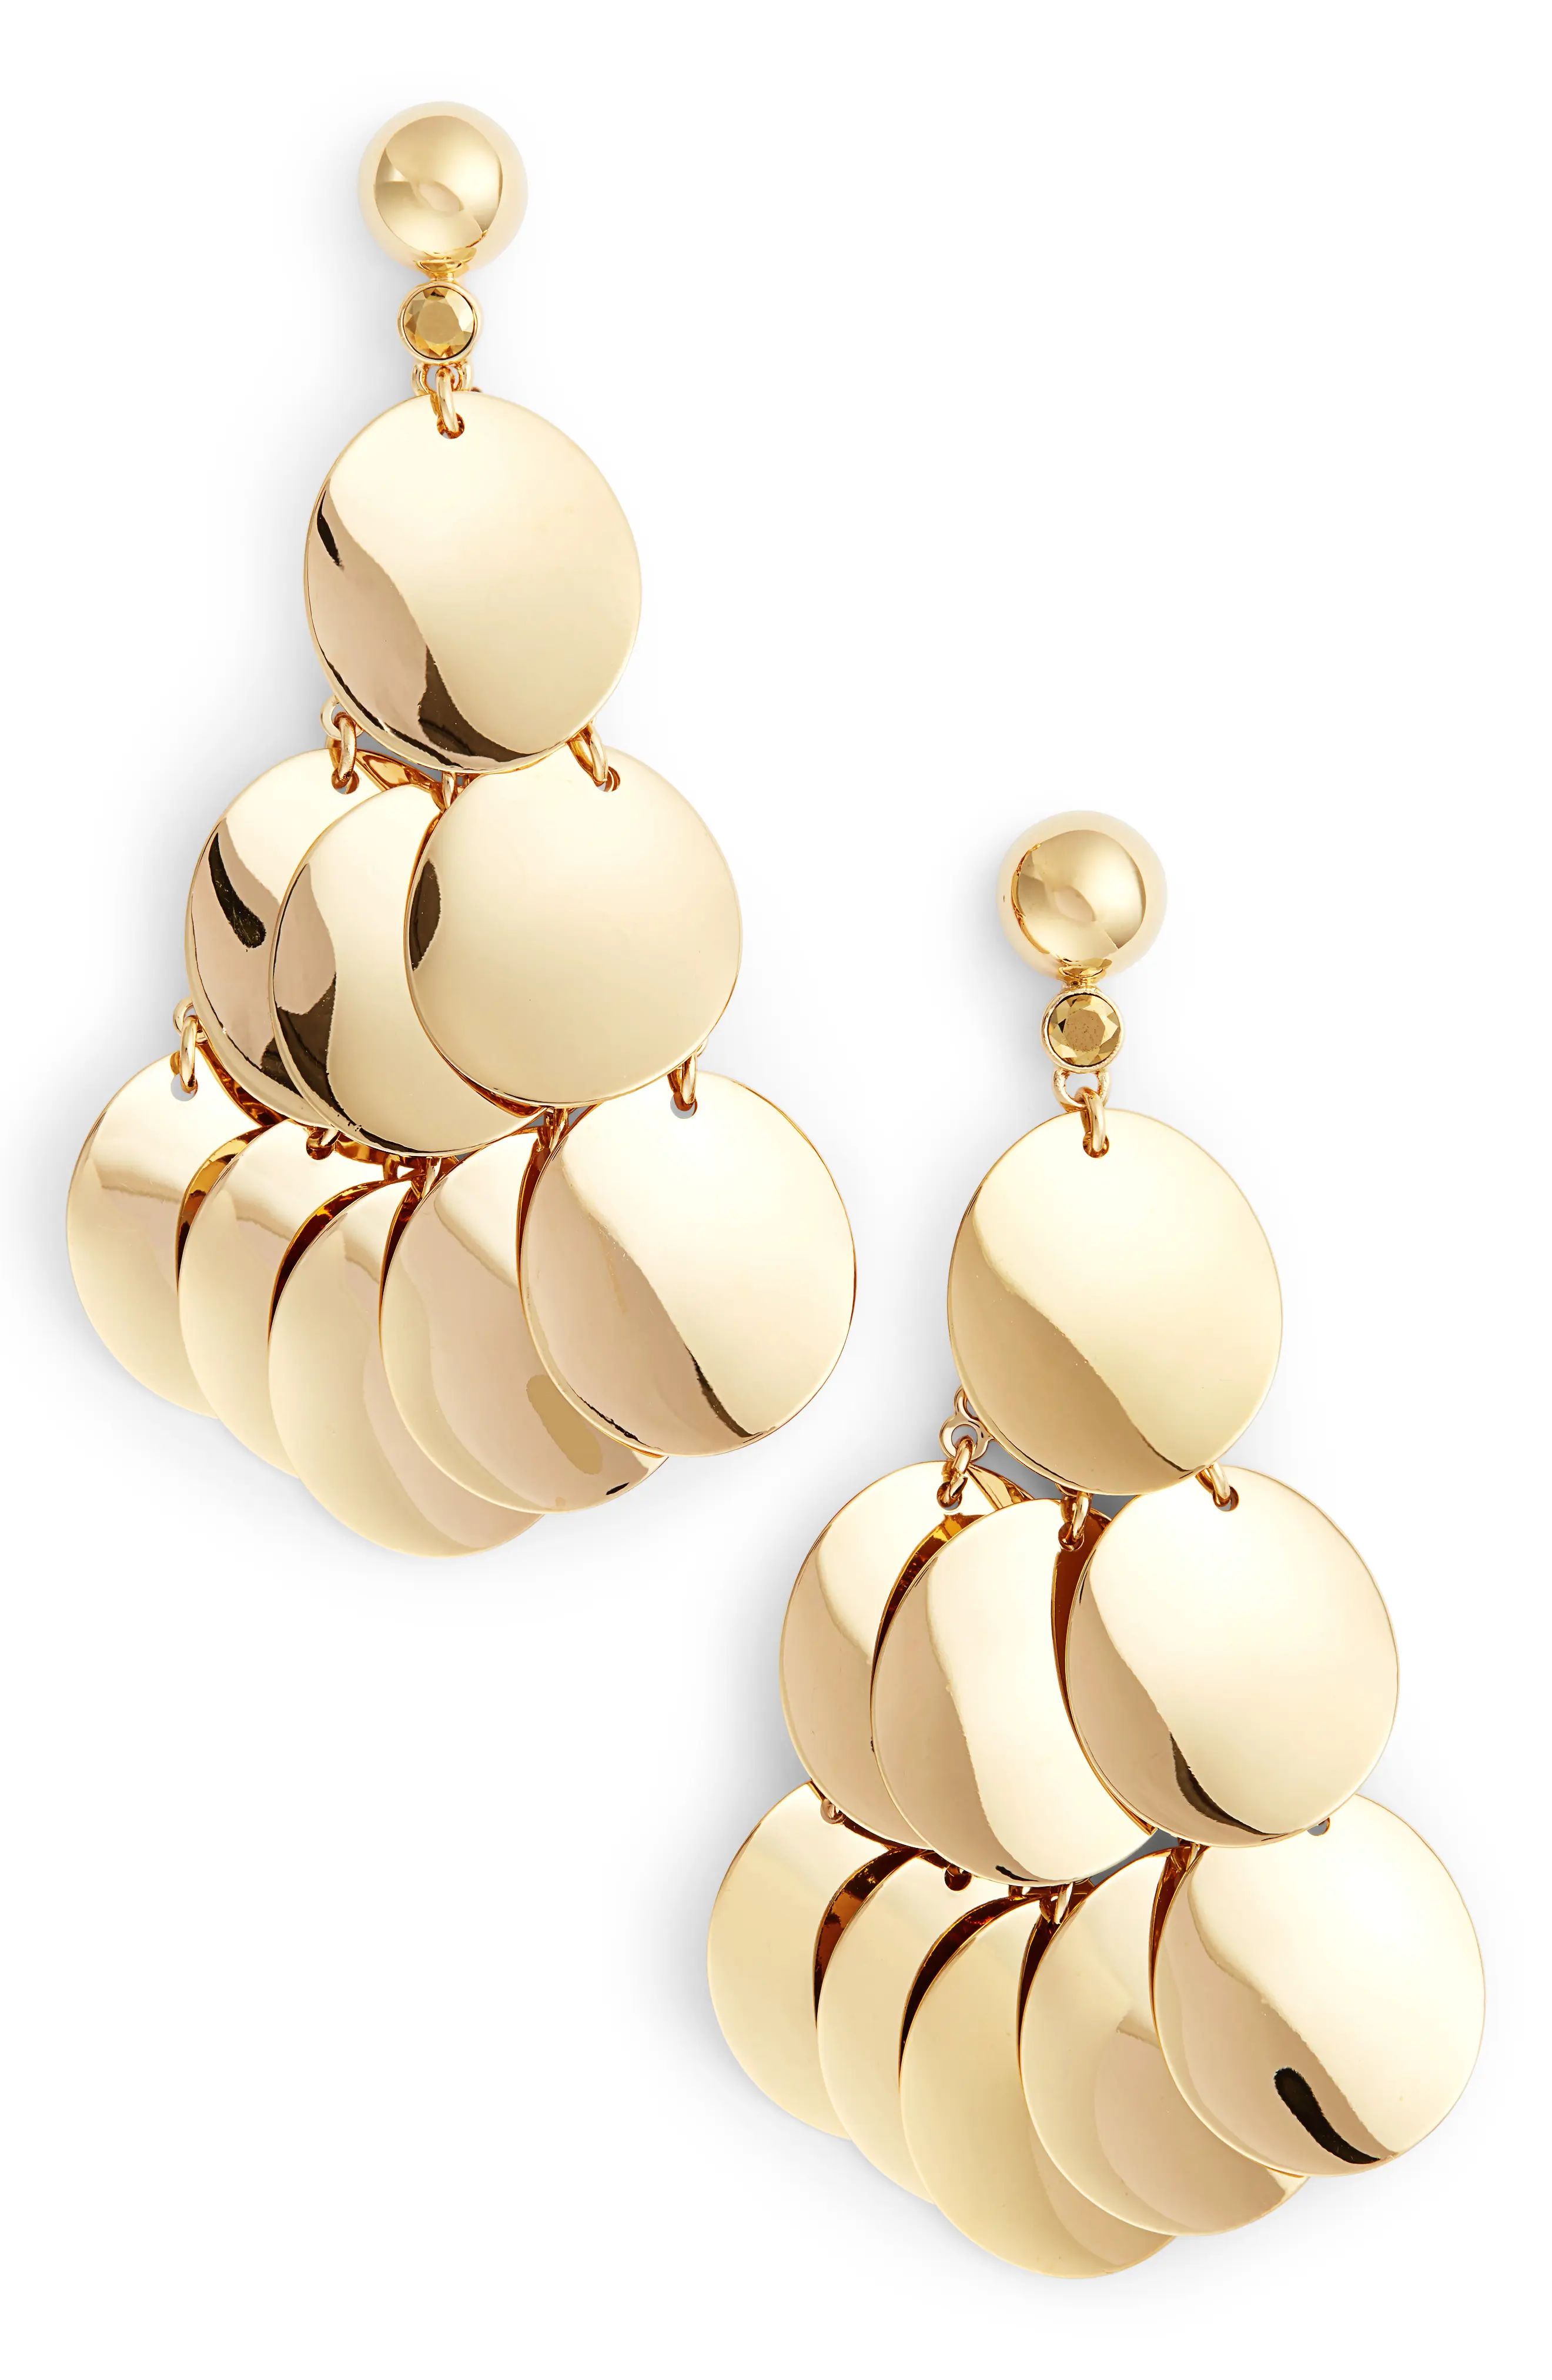 gold standard statement earrings | Nordstrom